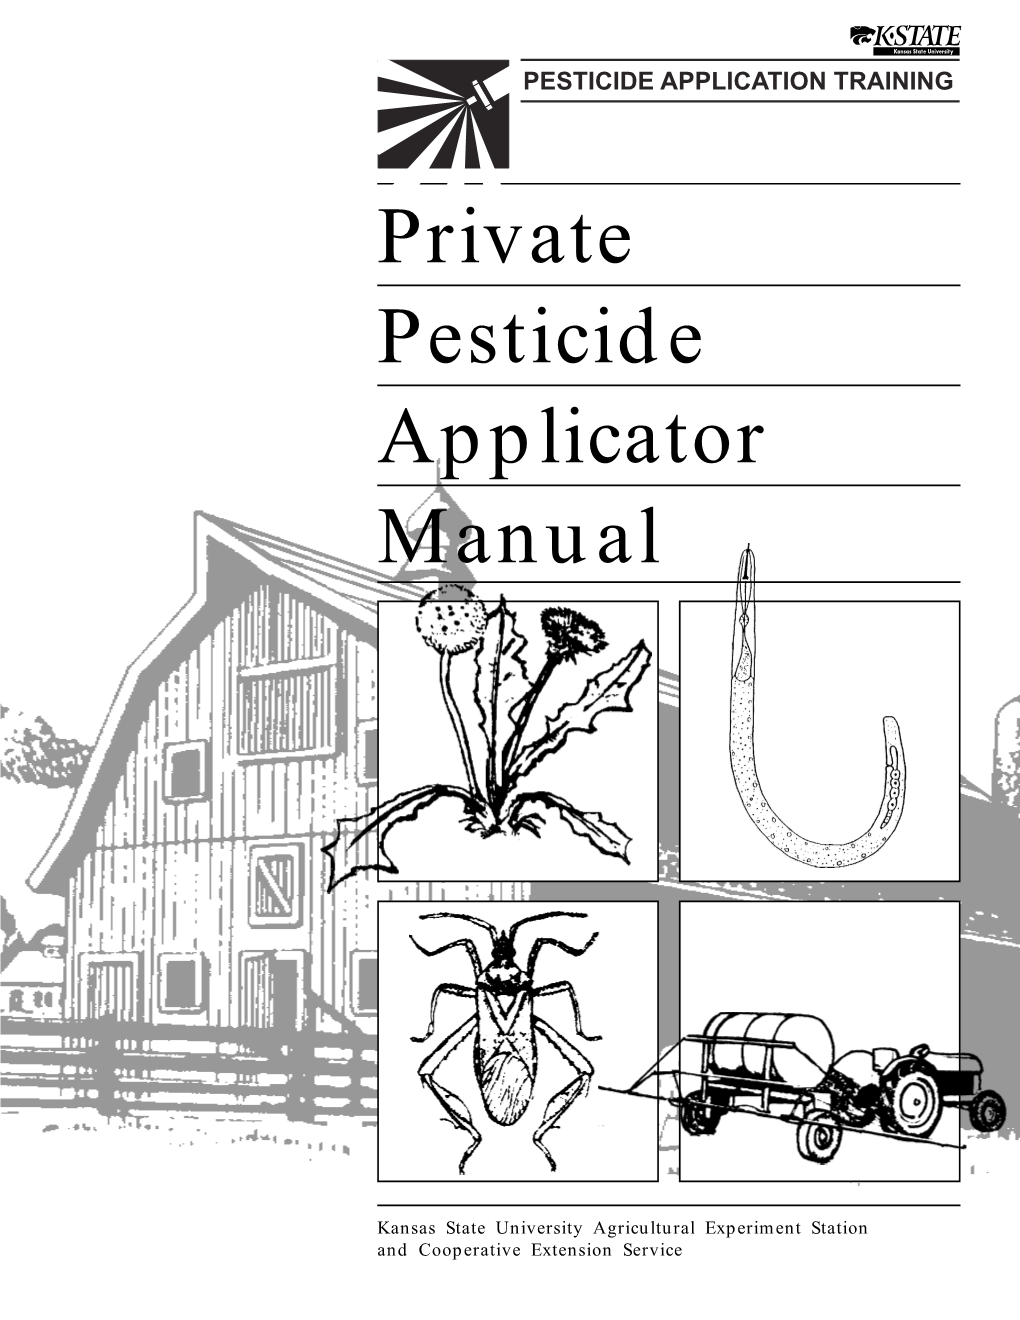 Private Pesticide Applicator Manual